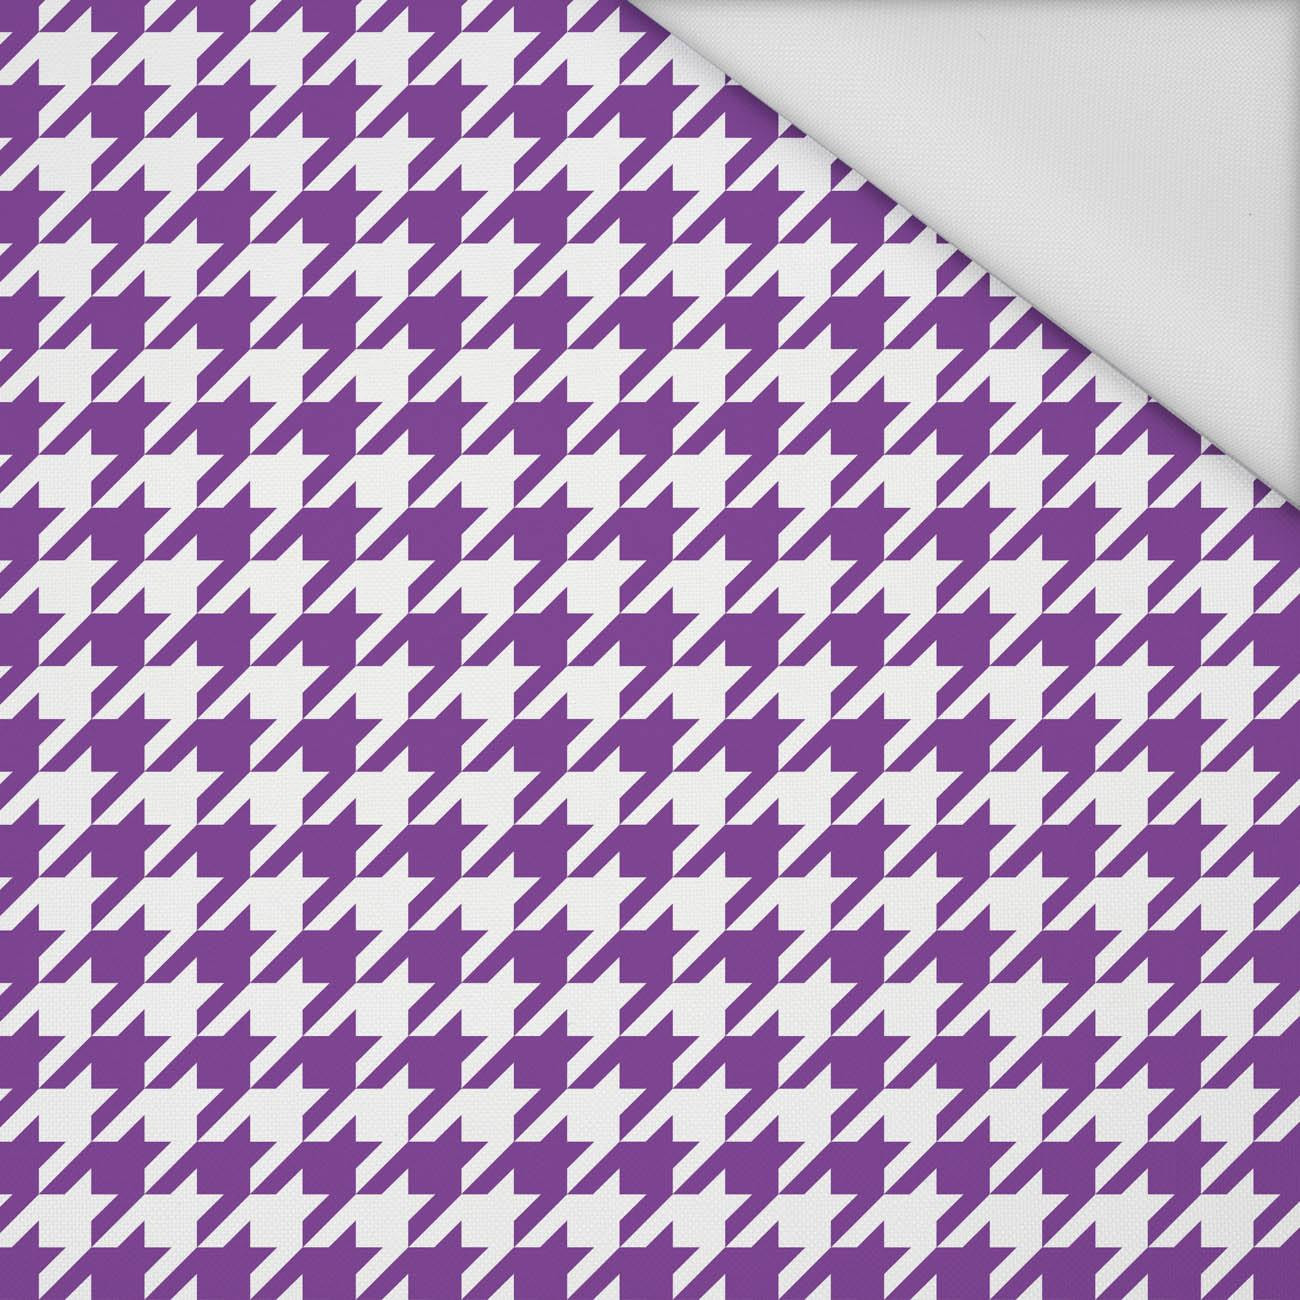 PURPLE HOUNDSTOOTH / WHITE - Waterproof woven fabric